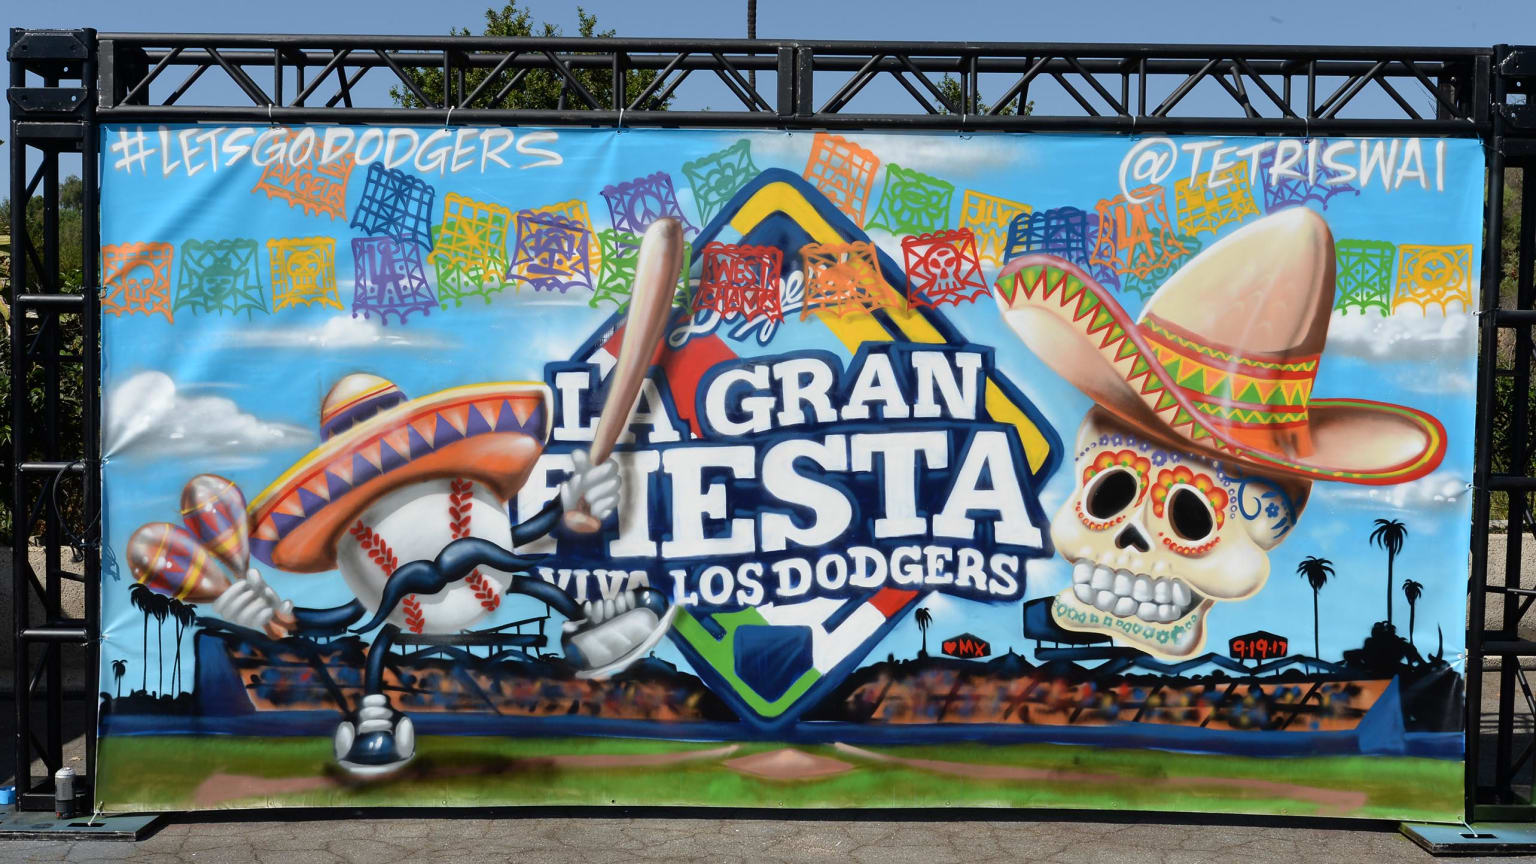 Viva Los Dodgers. 🇲🇽 - Los Angeles Dodgers